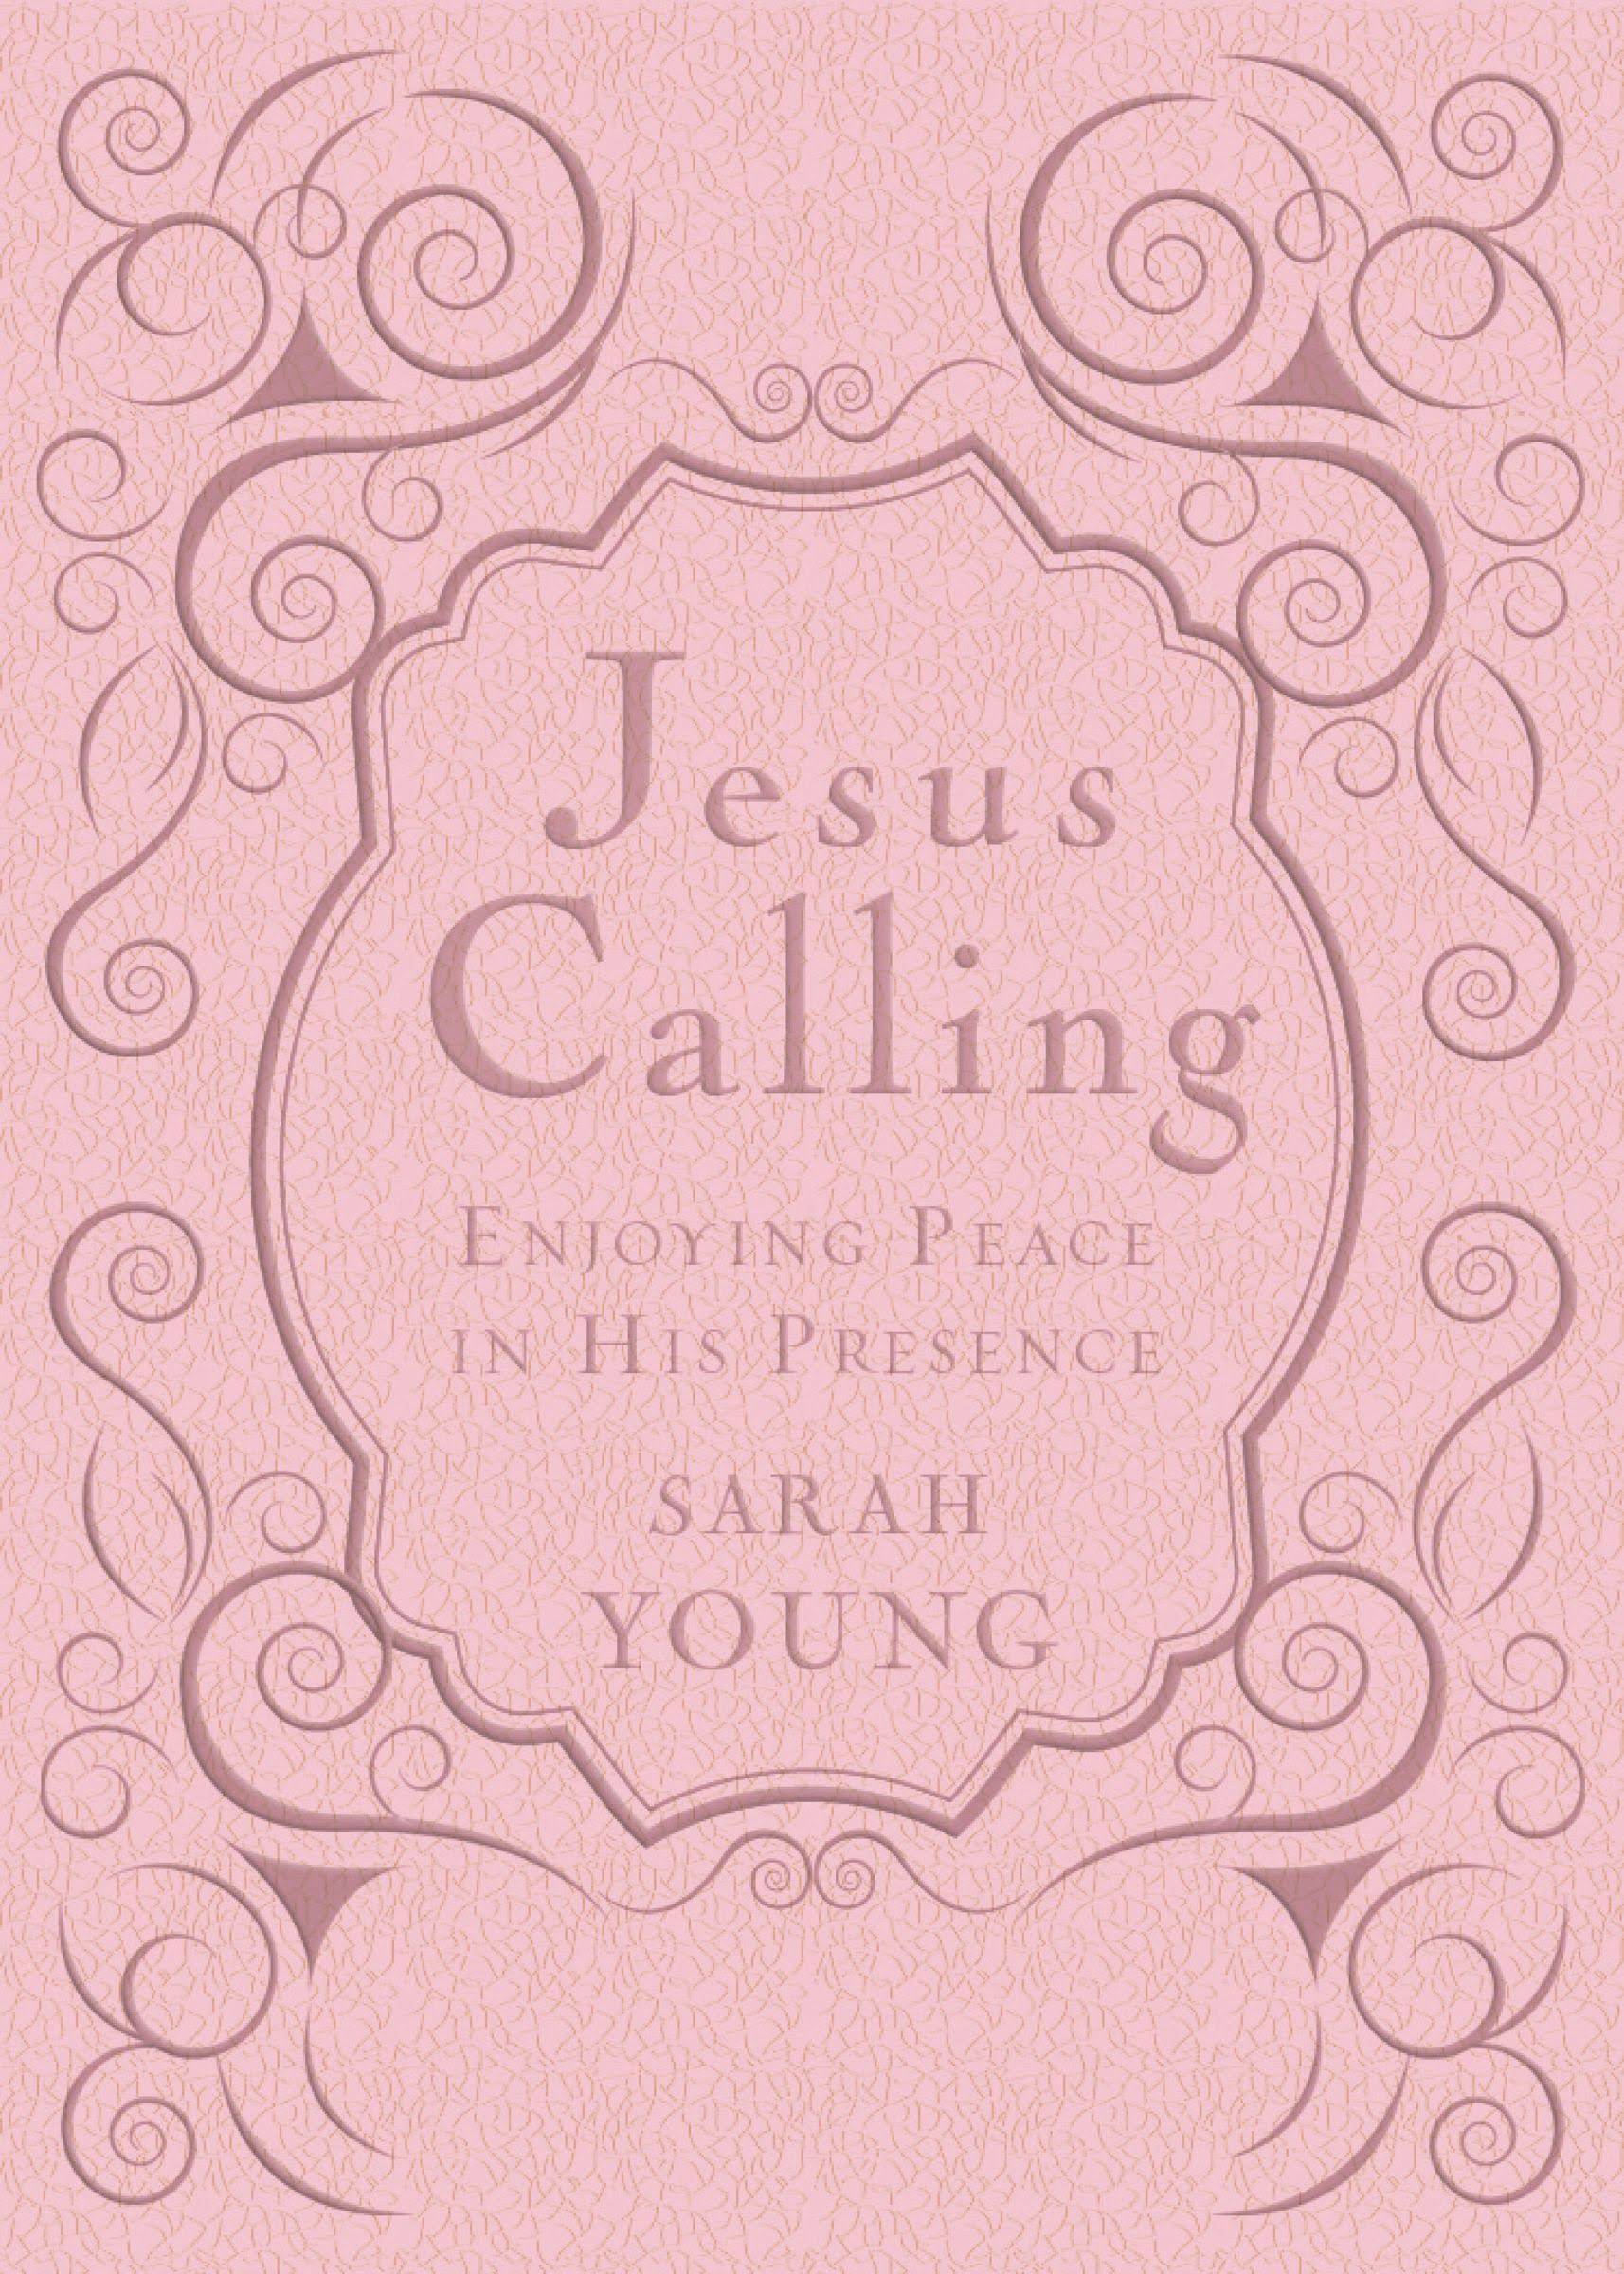 Jesus Calling: Enjoying Peace in His Presence [Book]